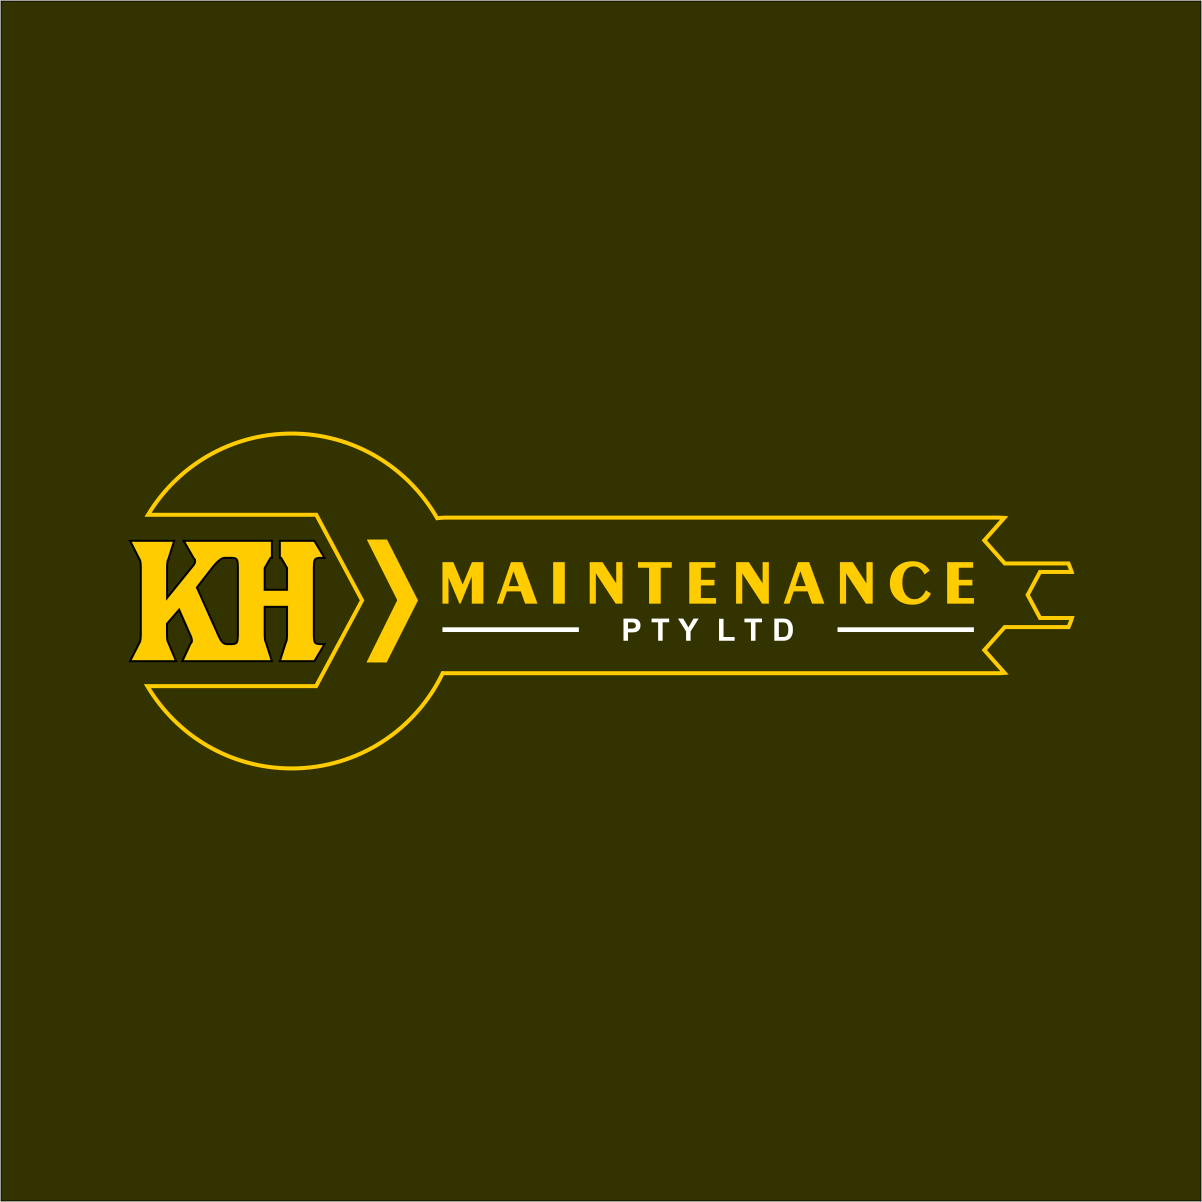 maintenance logo